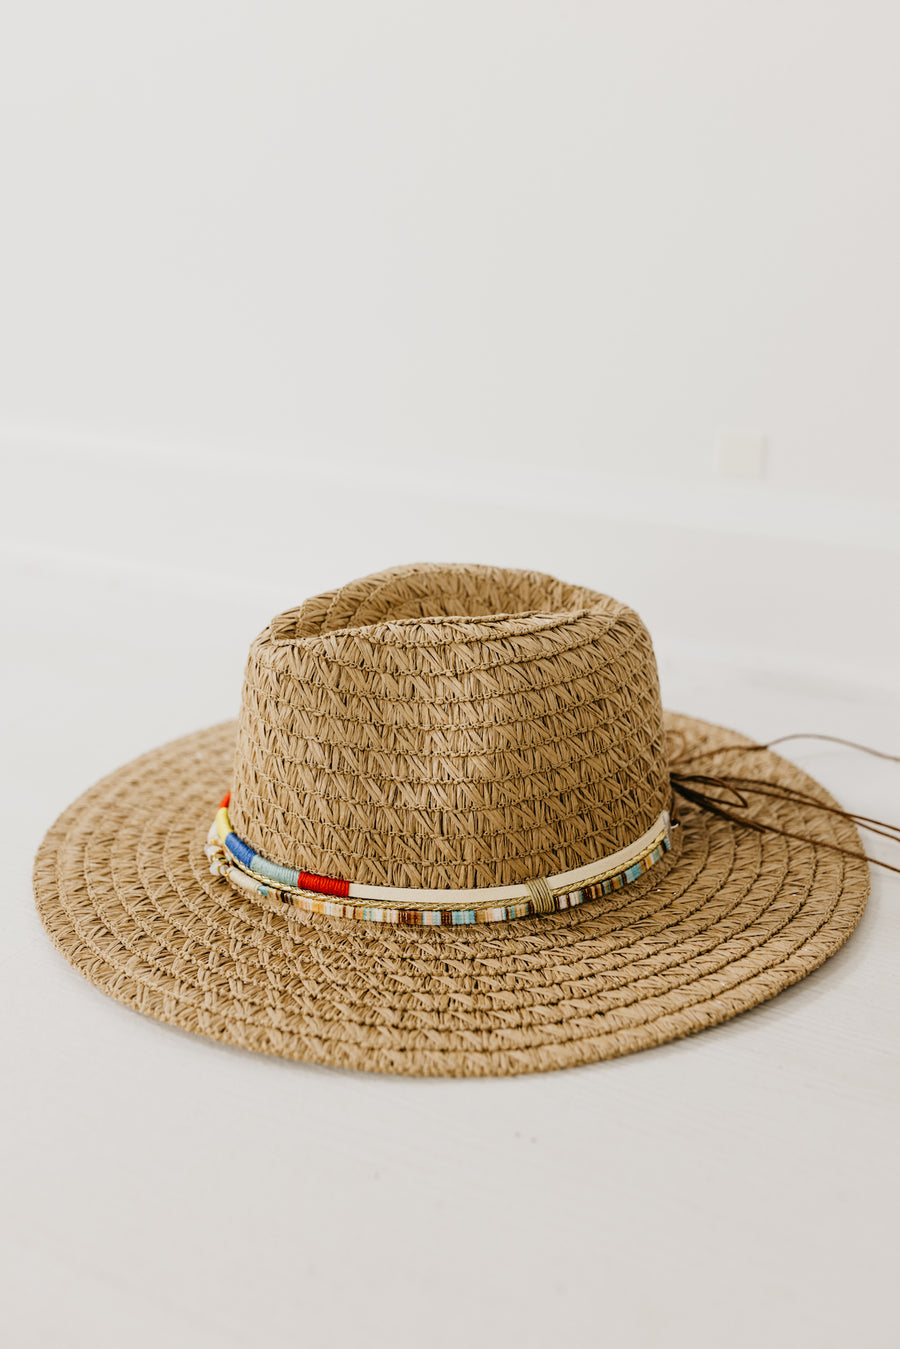 The Miyah Woven Straw Sun Fedora Hat